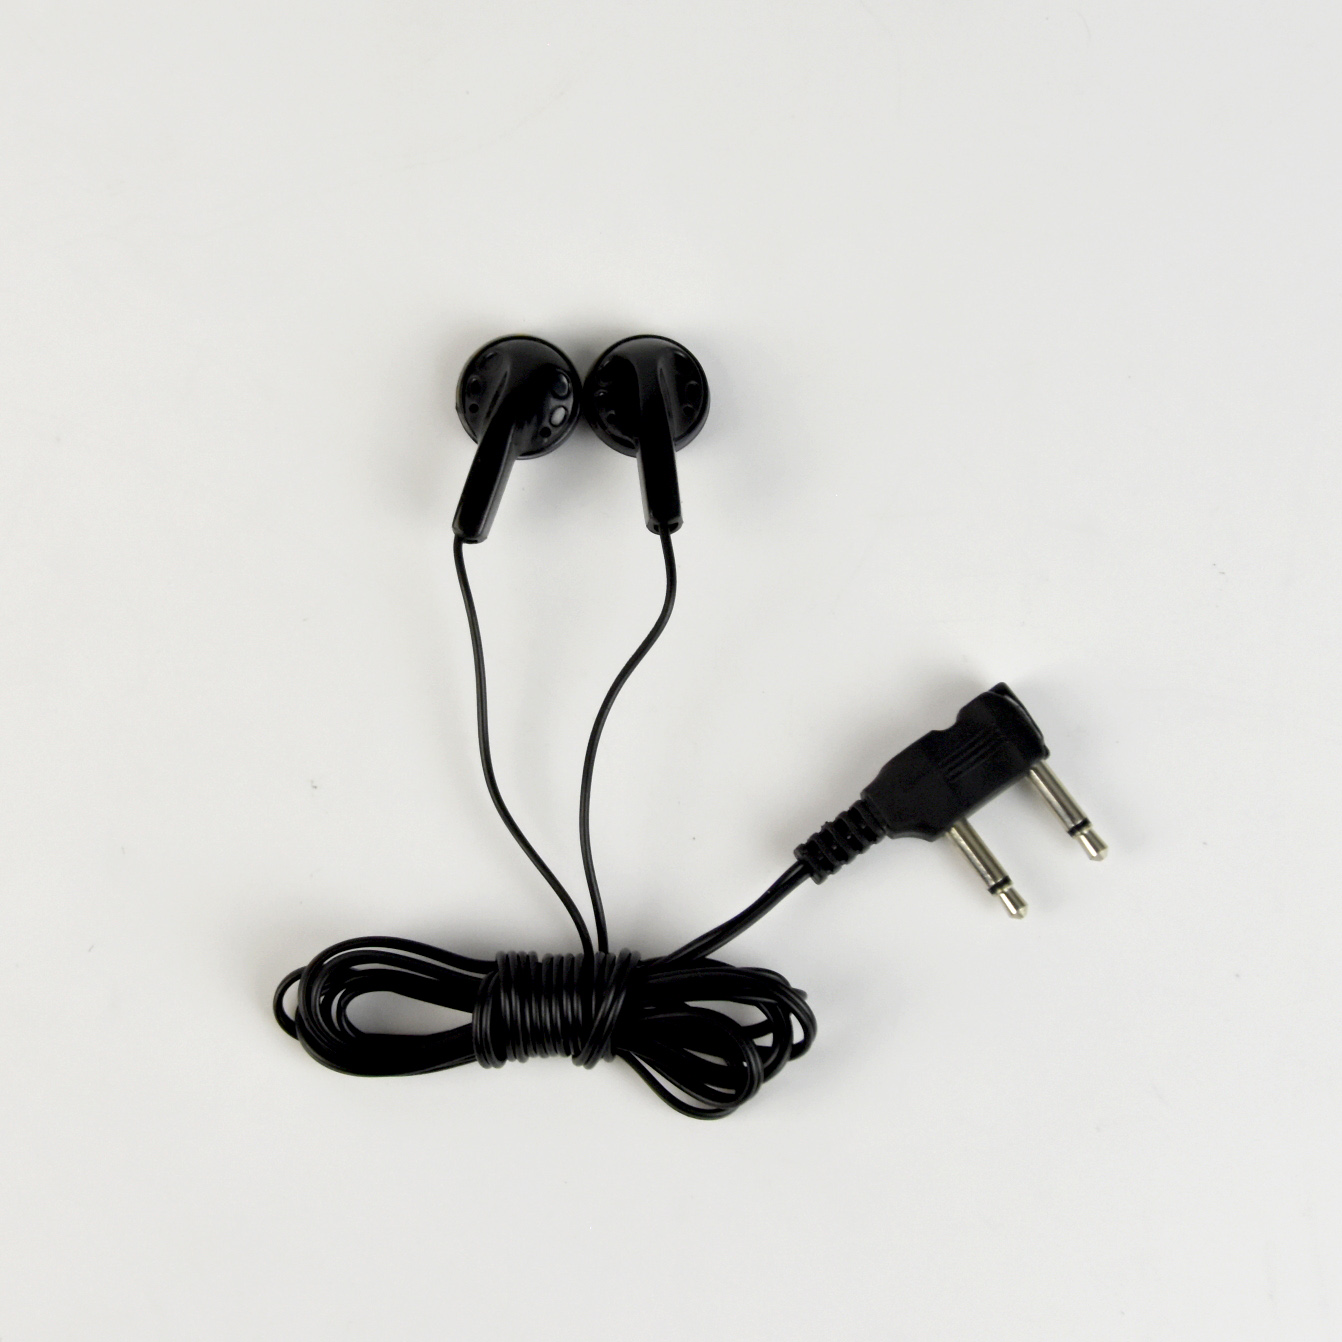 wired earphone